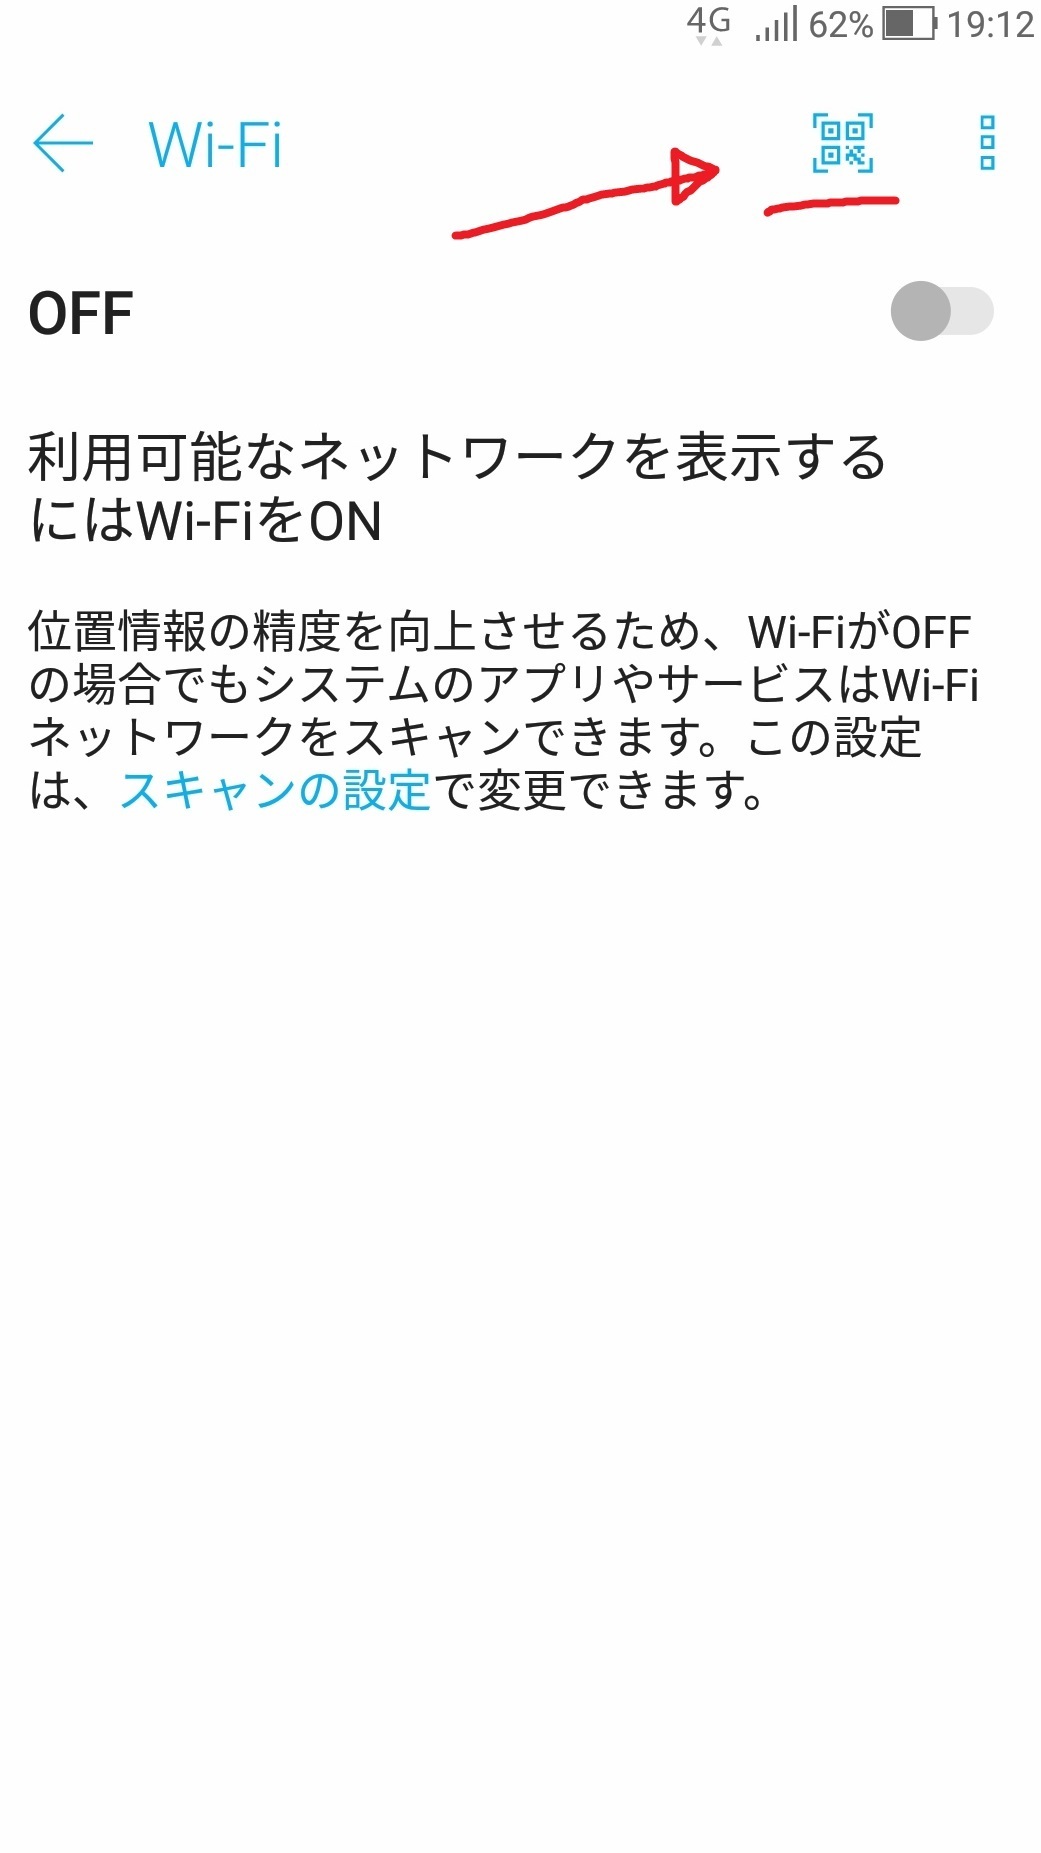 QRcord_yomitori_sumaho_android.jpg